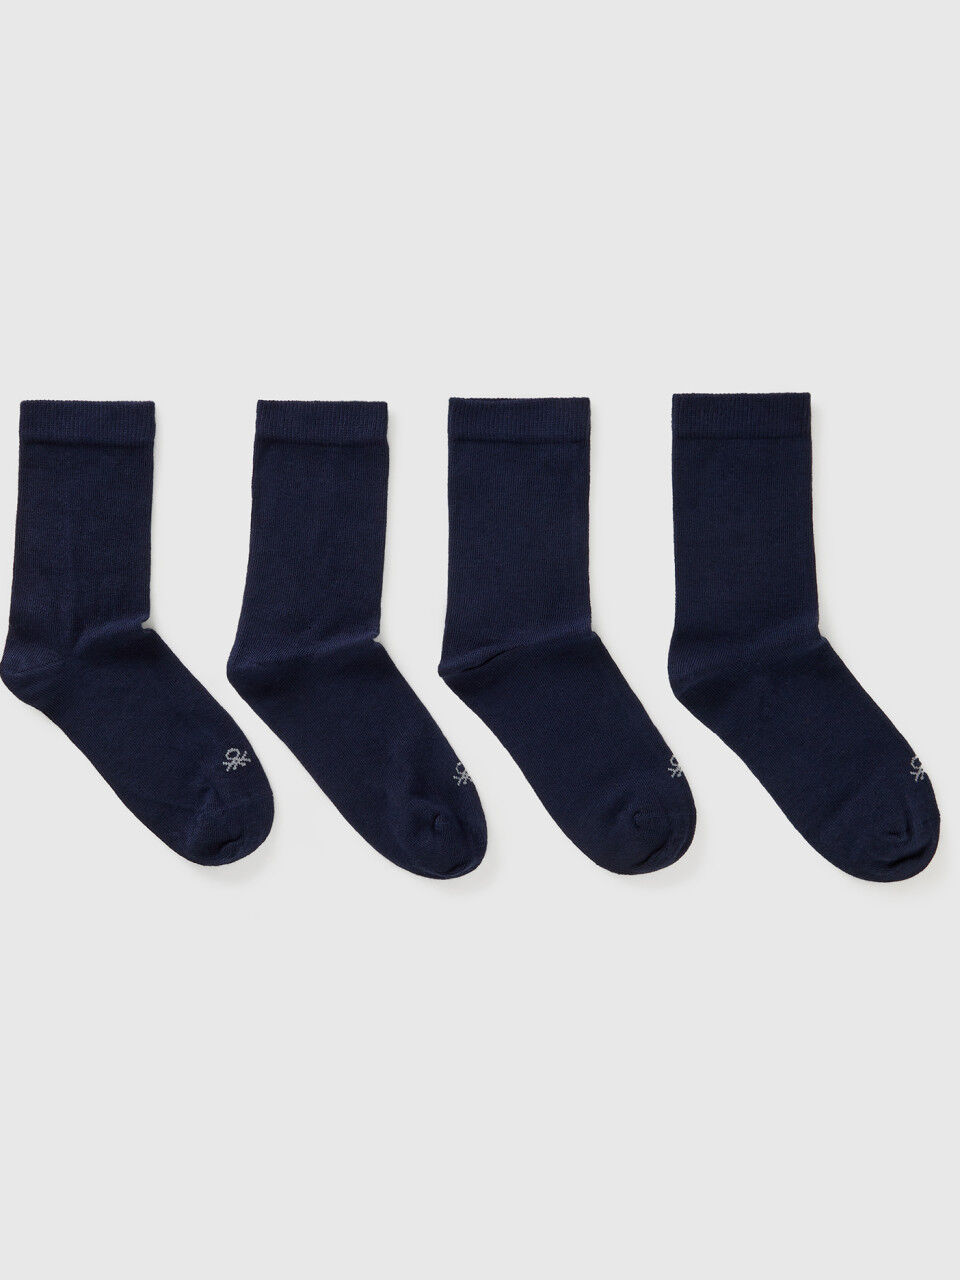 Quattro paia di calze blu scuro